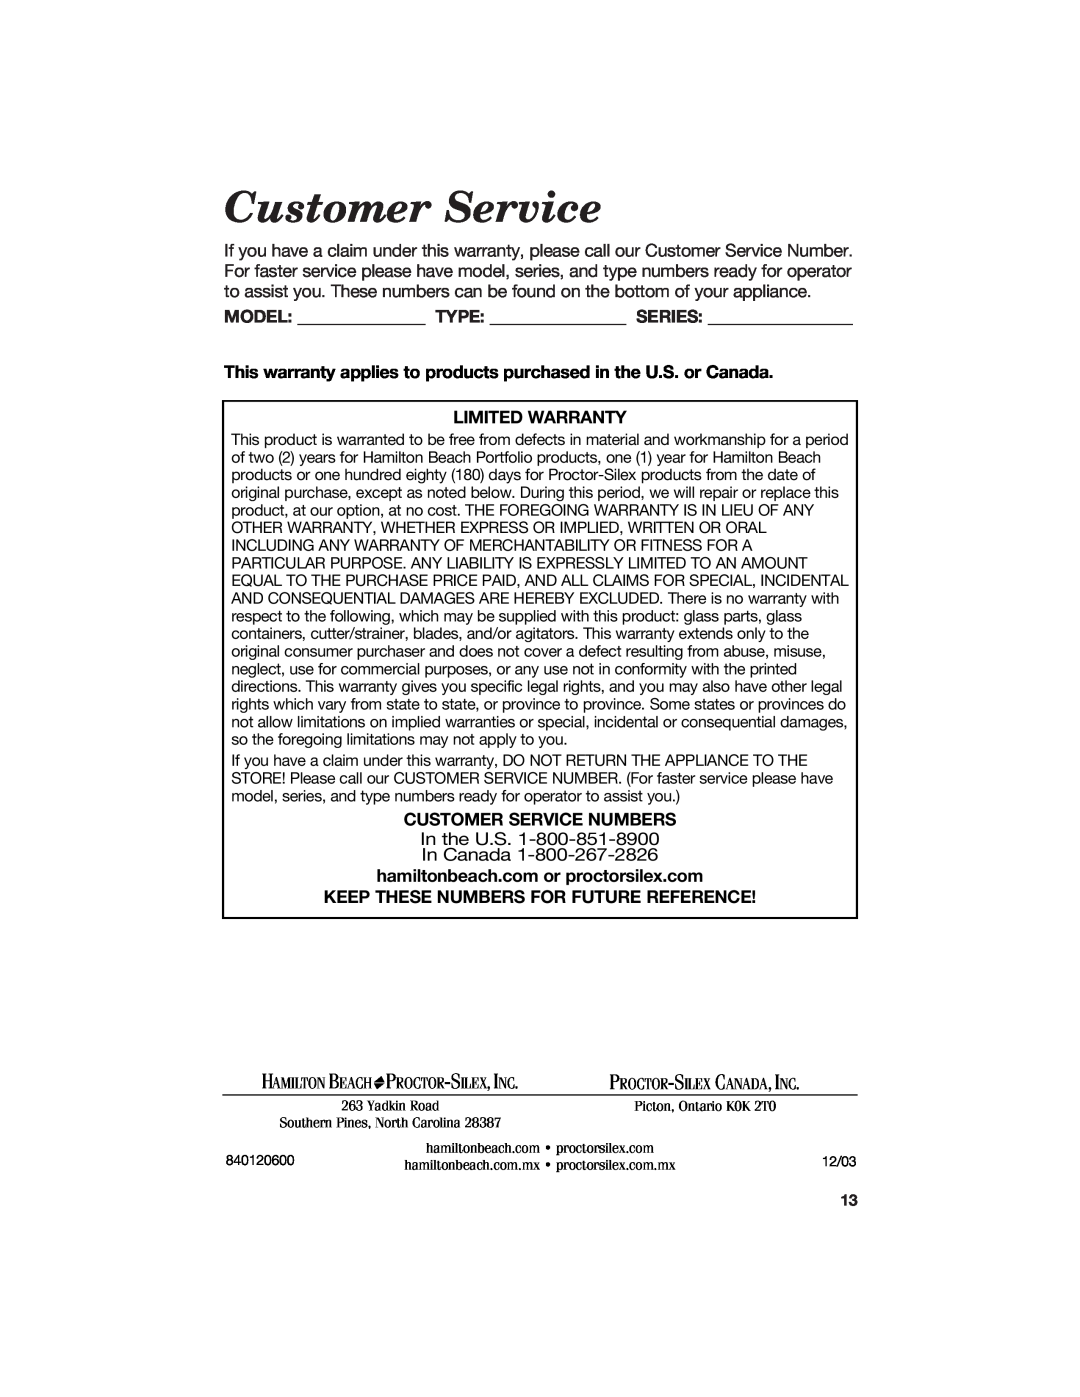 Hamilton Beach Ice Cream and Frozen Yogurt Maker Customer Service, Model Type Series, Limited Warranty, Proctor-Silex, Inc 